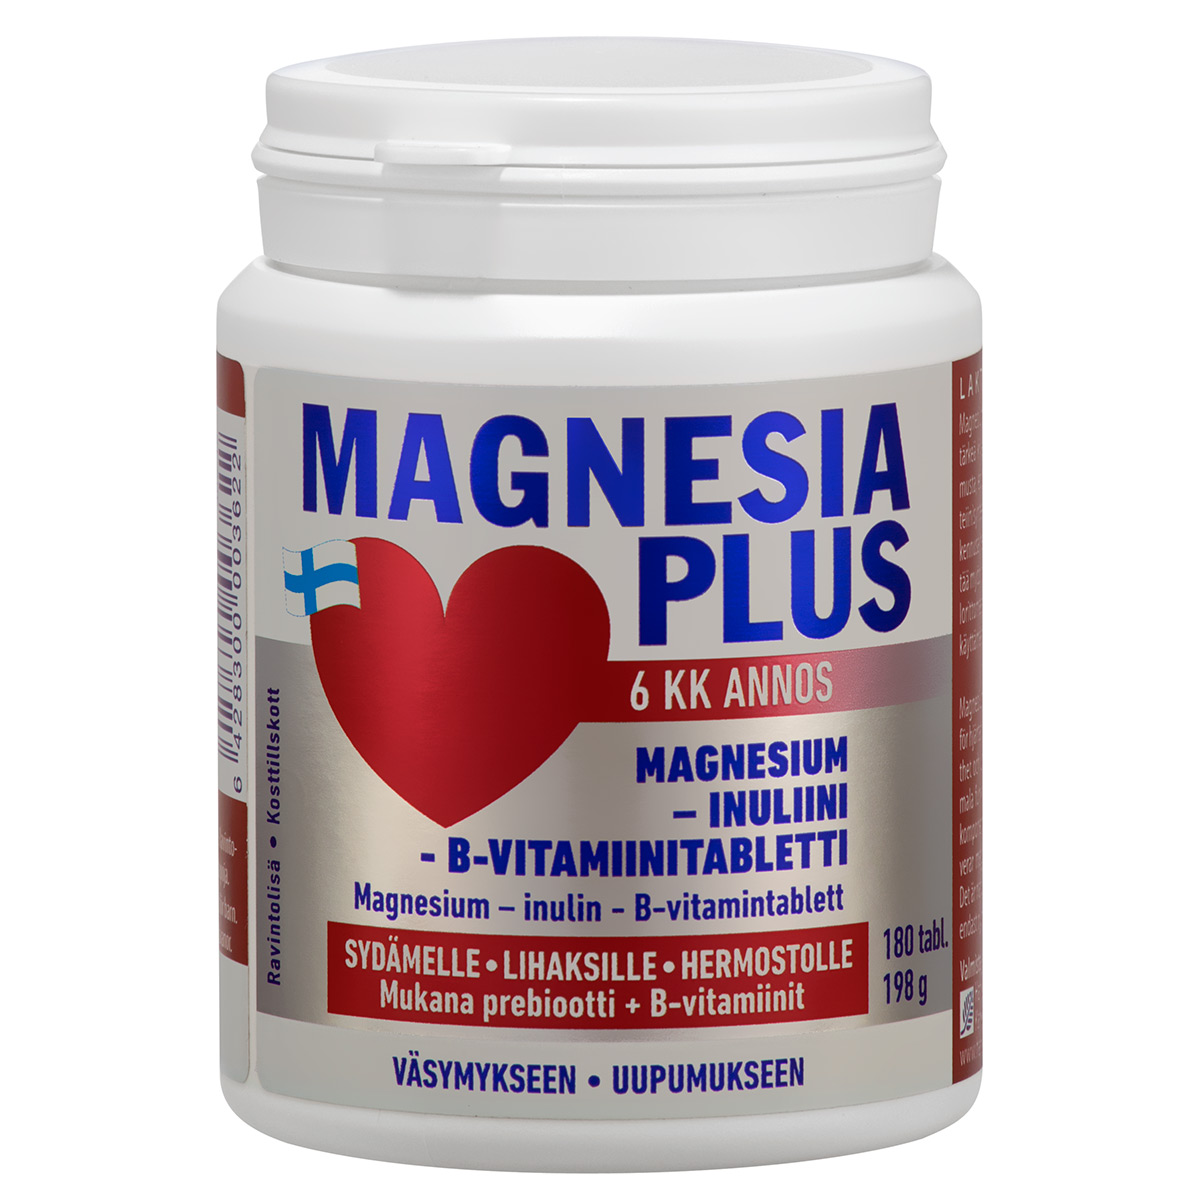 Витамин в купить в таблетках спб. Витамины таб плюс 180 Magnesia. Витамины Magnesia Plus (магнезия плюс) - 180 таб. Magnesia финские витамины. Финские витамины магний в6.